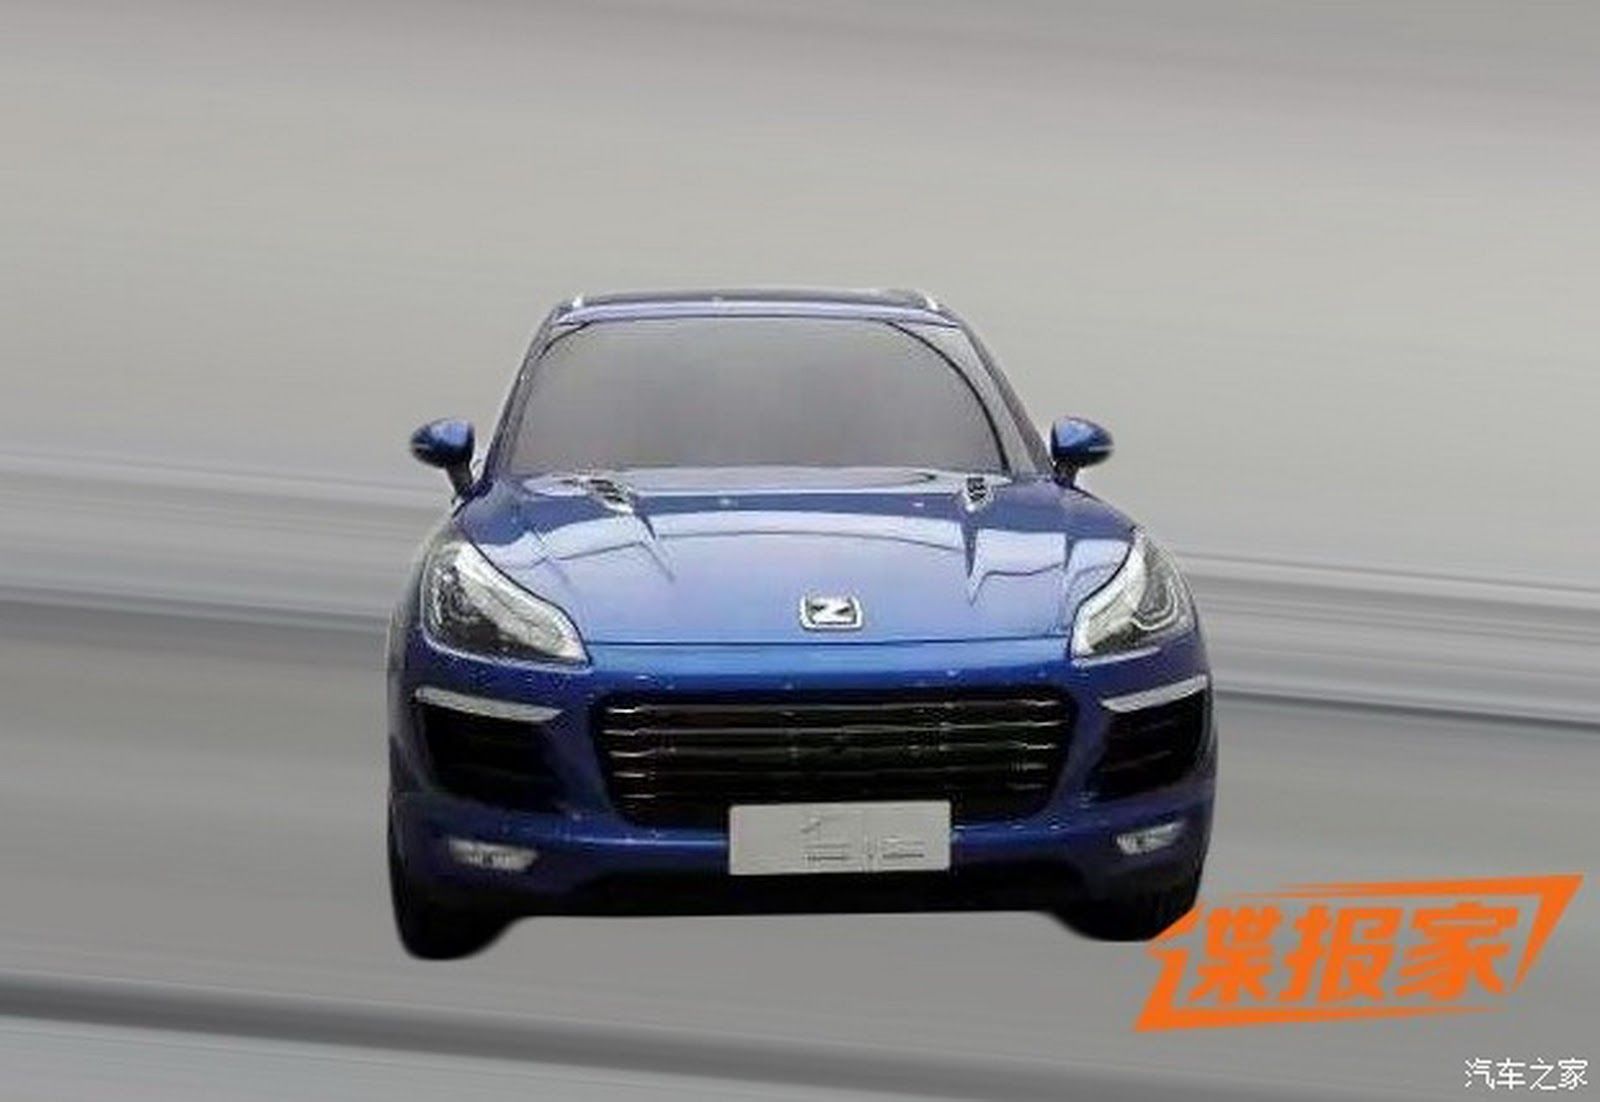 Porsche Versi ‘KW’ Hadir di China